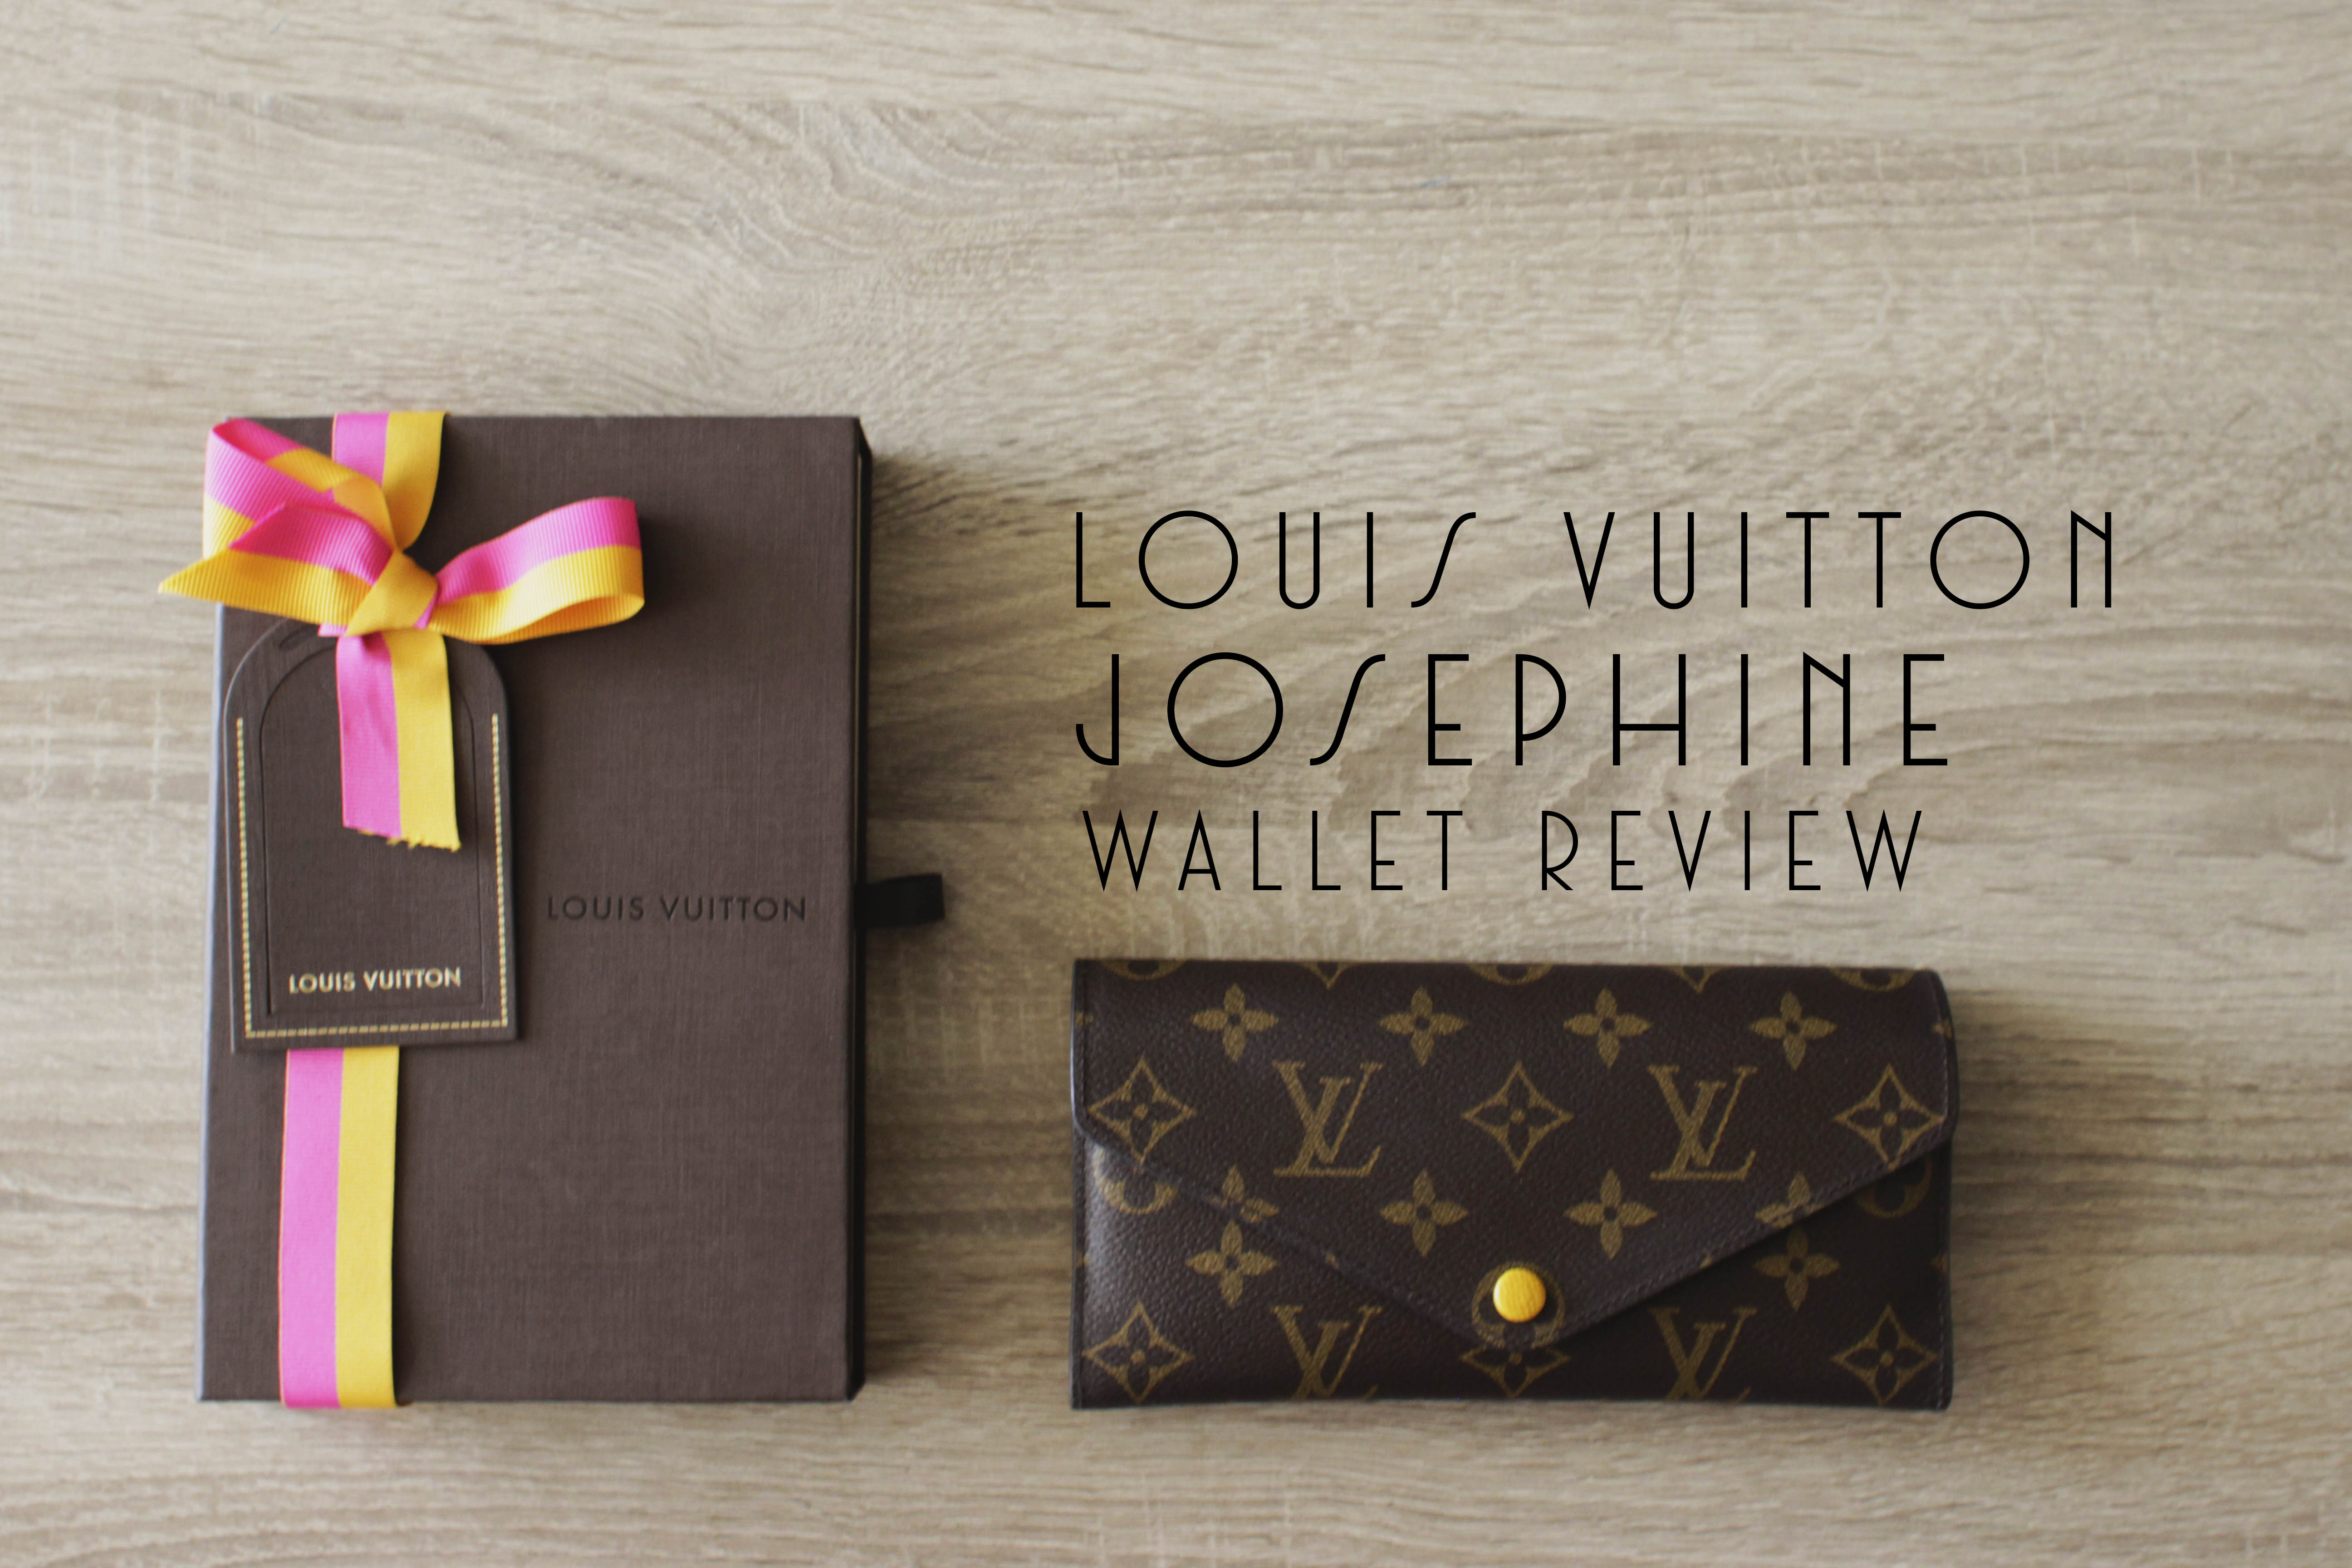 Louis Vuitton JOSEPHINE Wallet Review